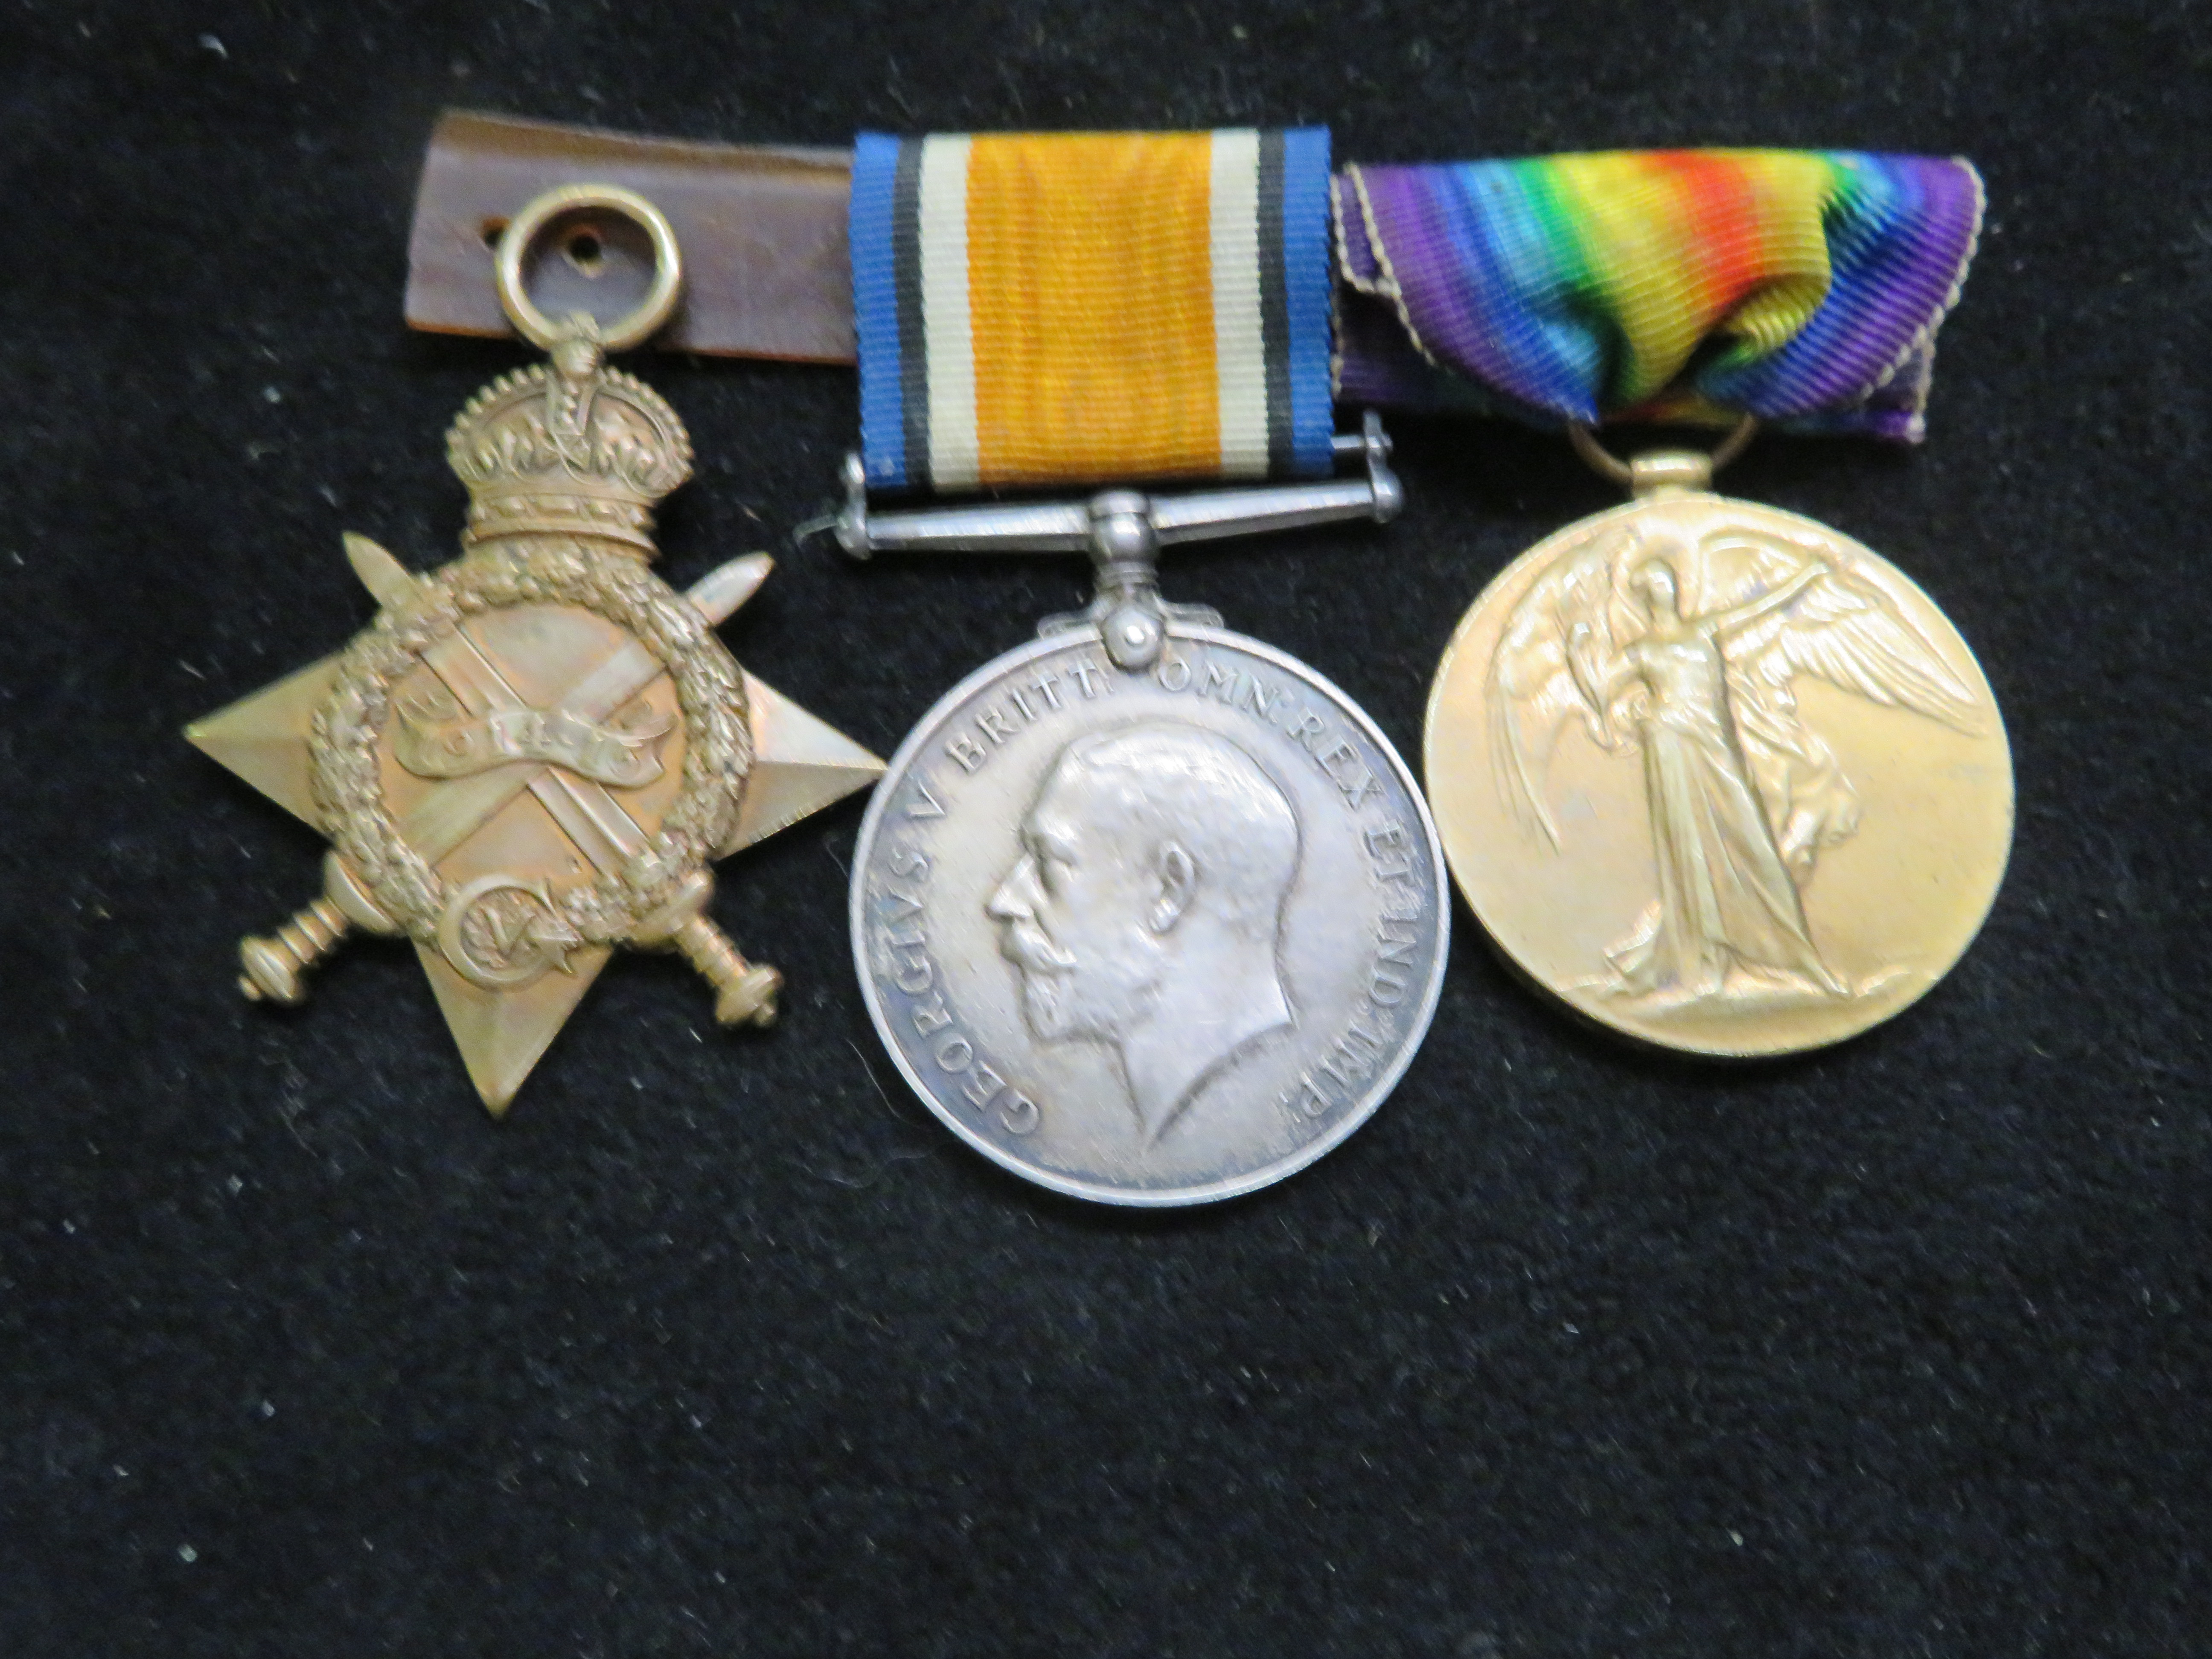 3x WWI medals named, Sargent J Muston north Staffordshire regiment 1416